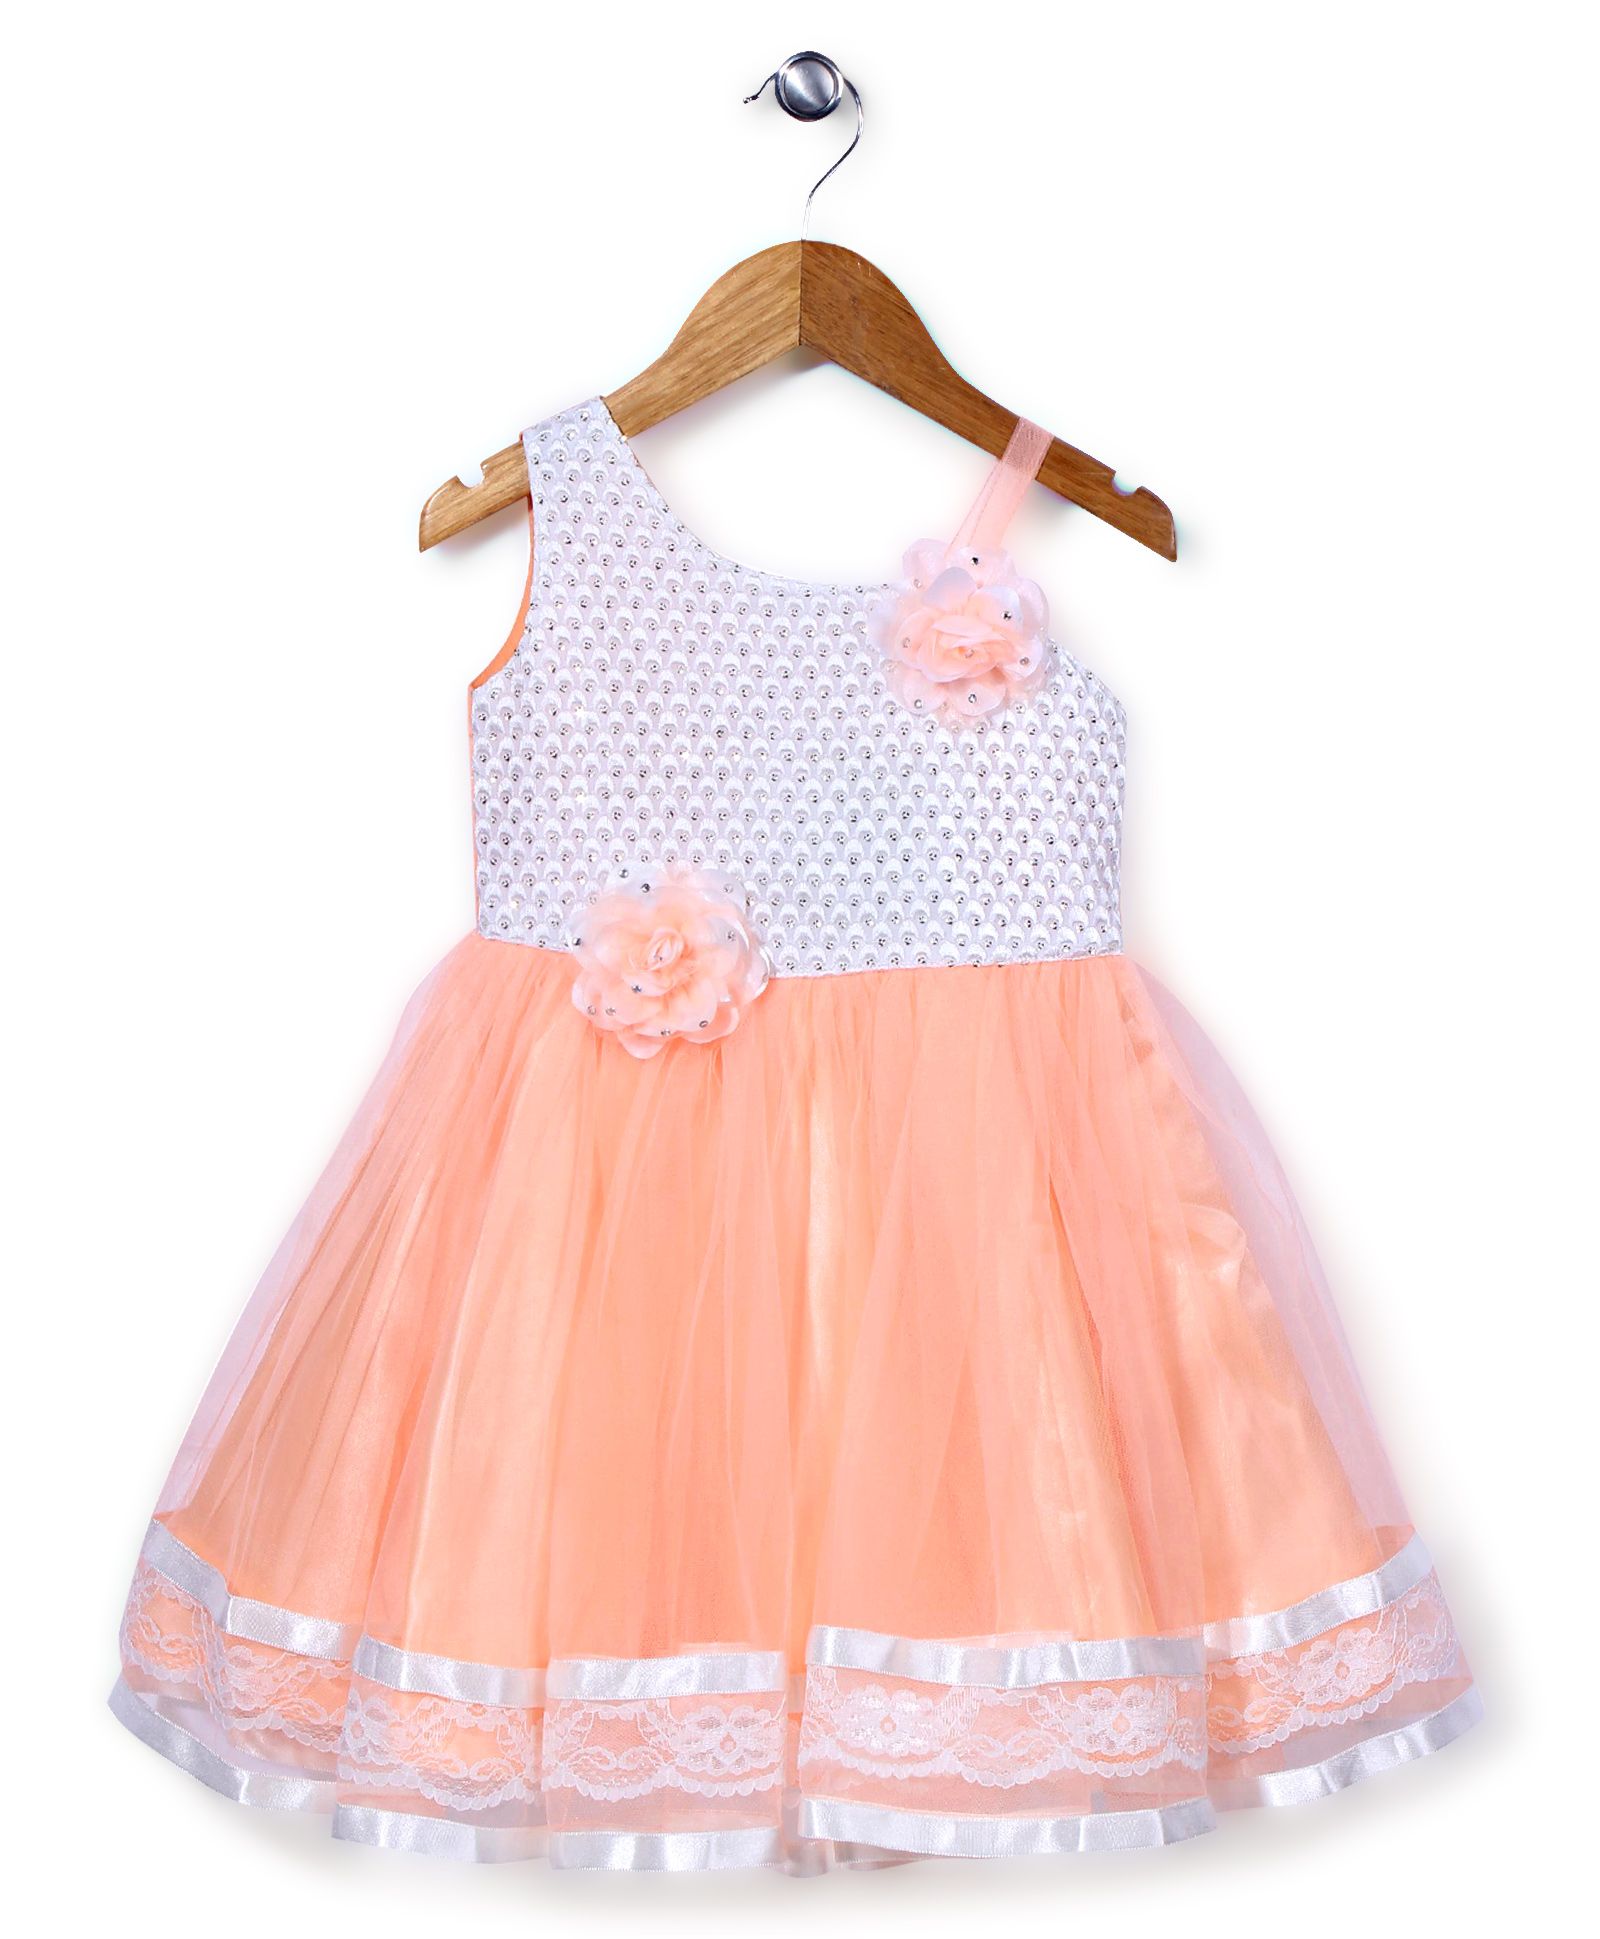 Babyhug Singlet Party Wear Dress Floral Applique - Peach